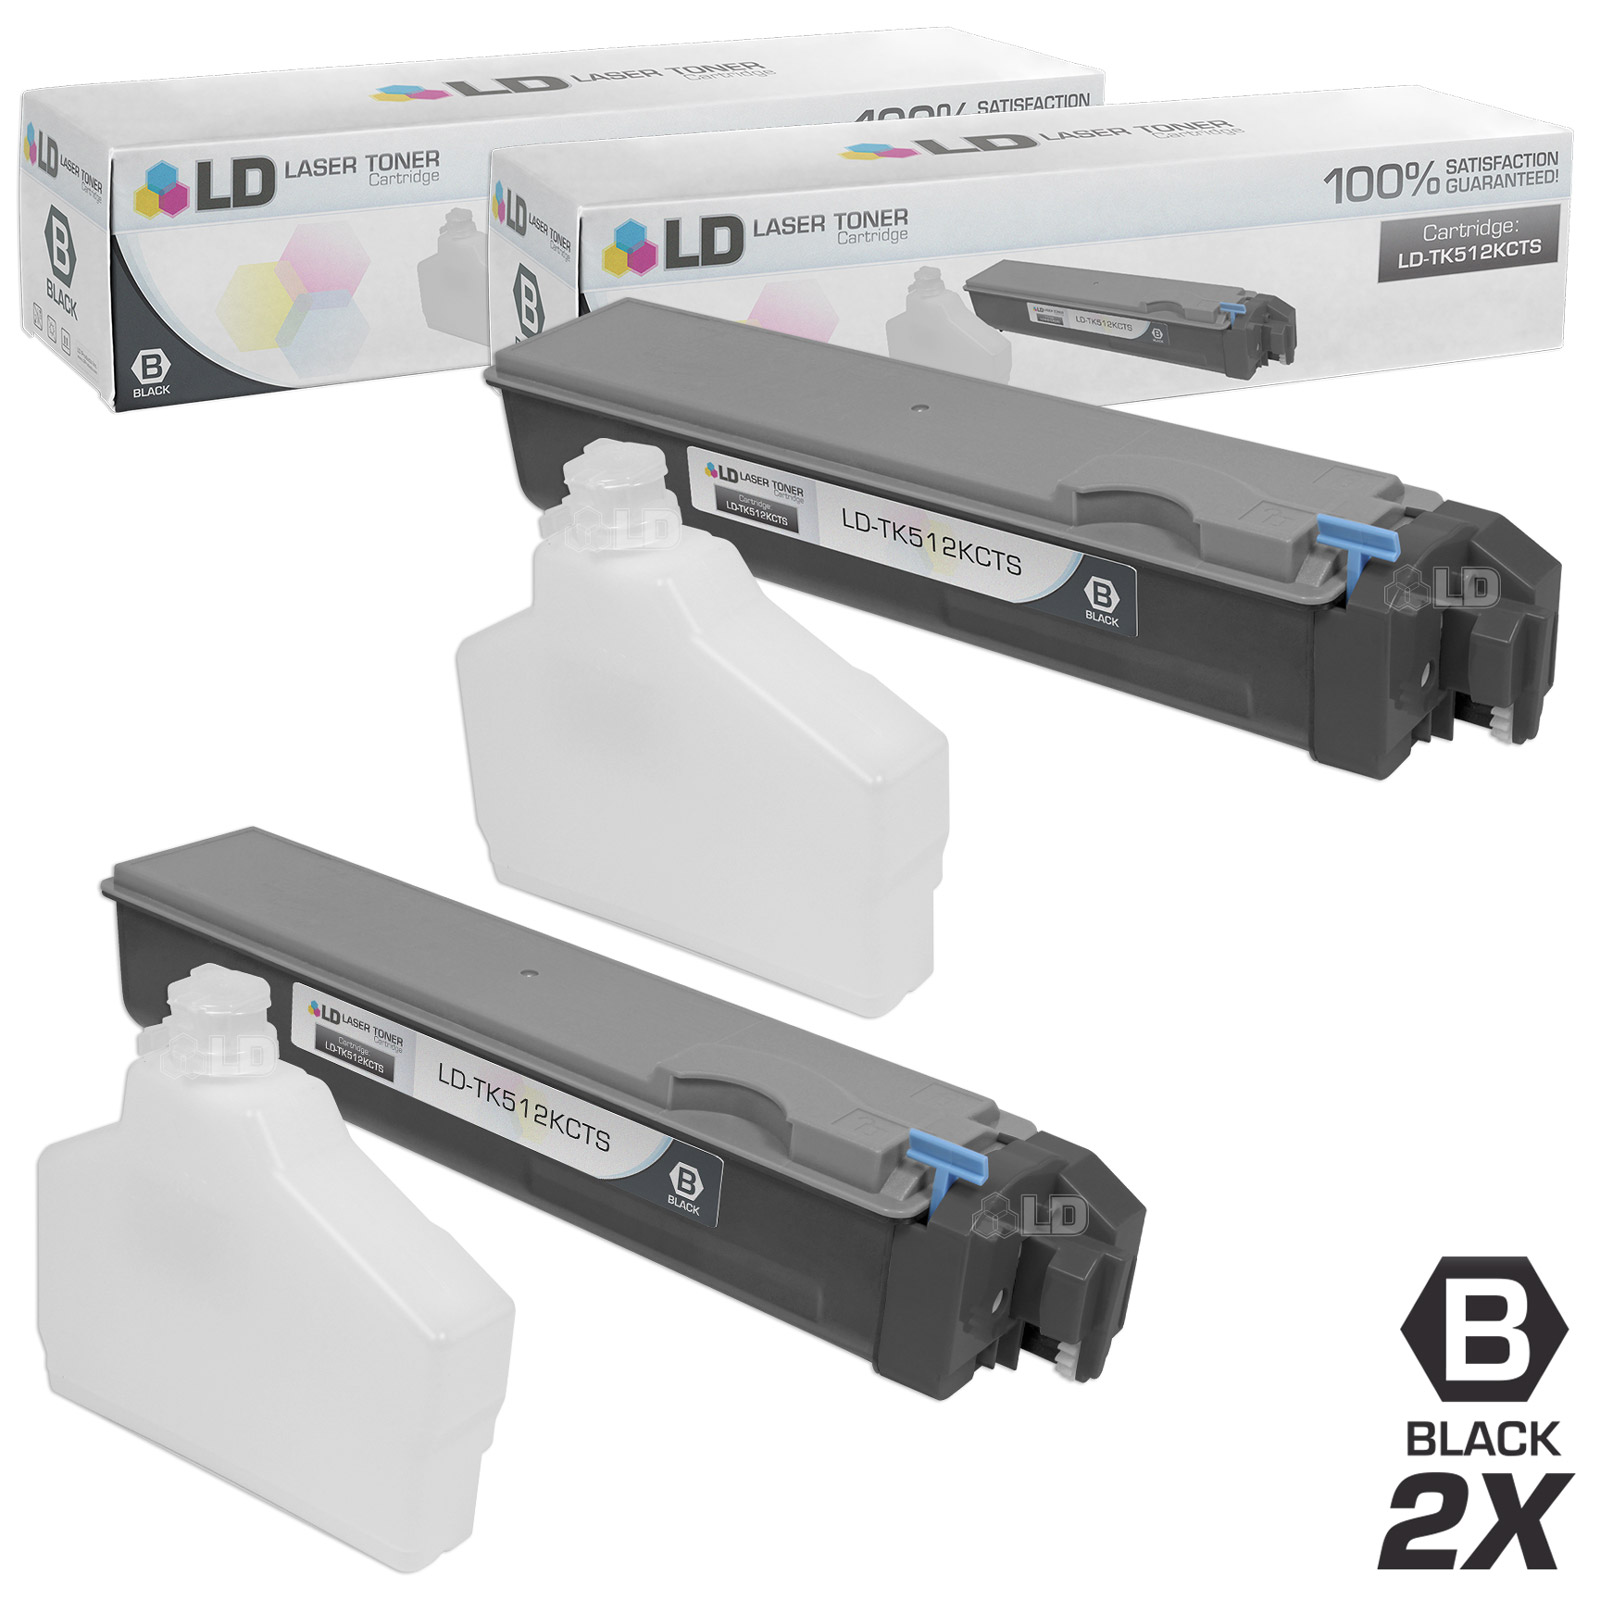 LD Compatible Replacements for Kyocera-Mita TK-512K Set of 2 Black Laser Toner Cartridges for use in Kyocera-Mita FS-C5020N, FS-C5025N, and FS-C5030N s - image 1 of 1